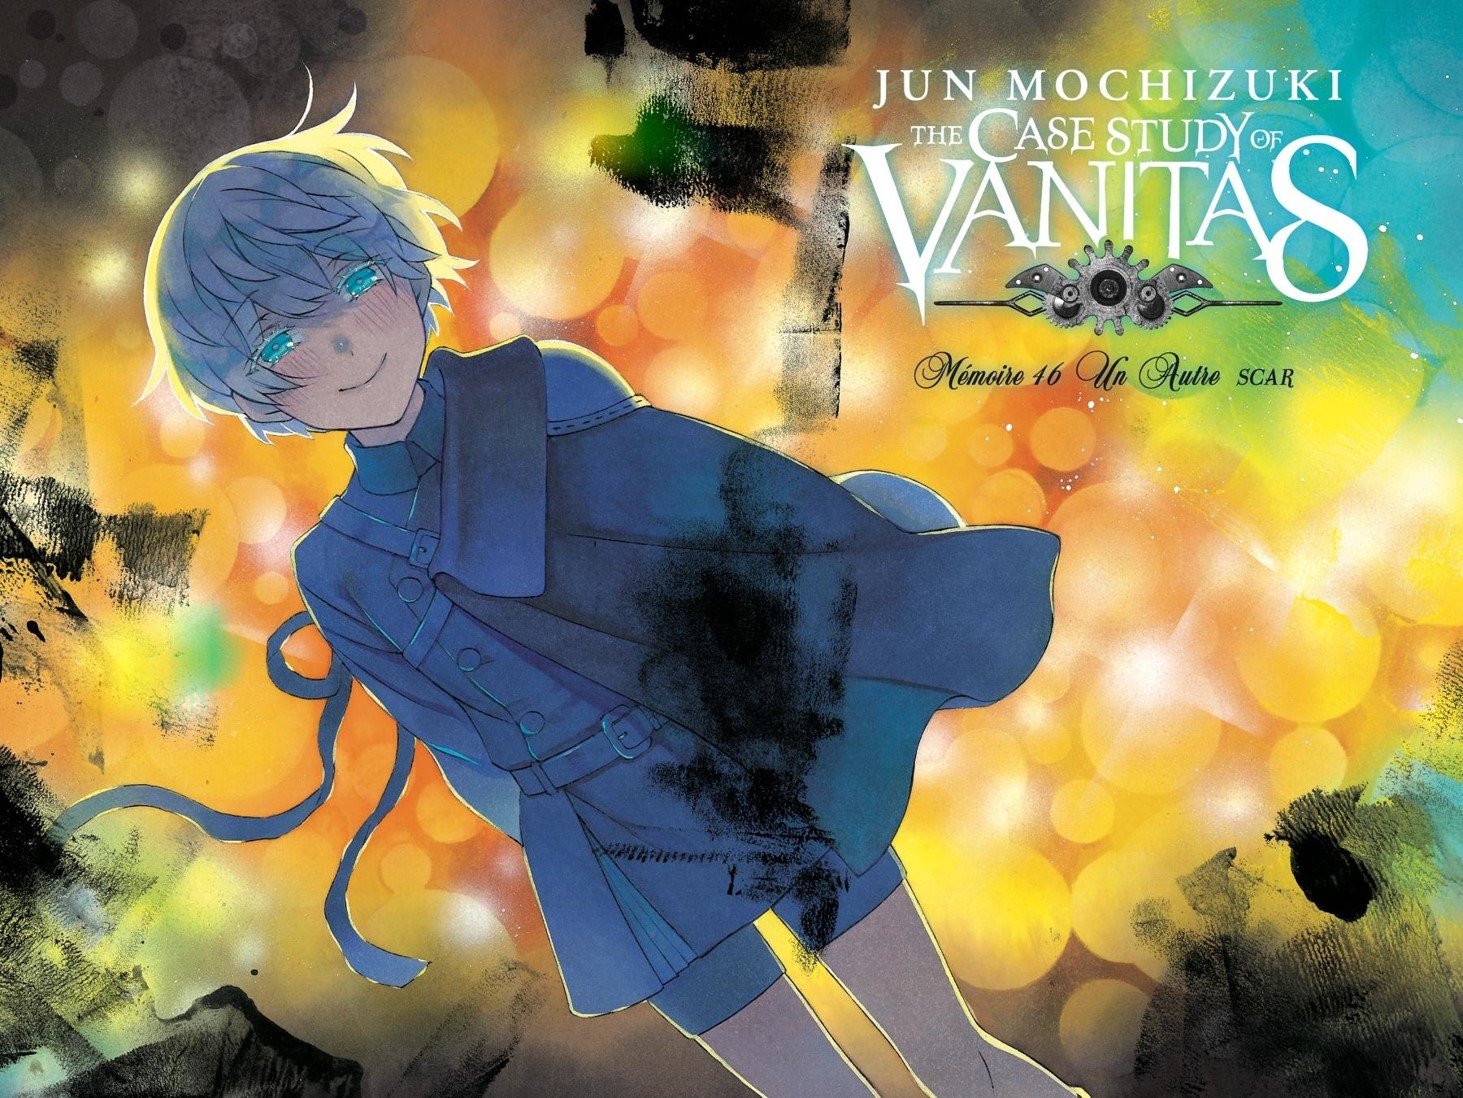 The Case Study of Vanitas, Vol. 2 by Jun Mochizuki, Paperback